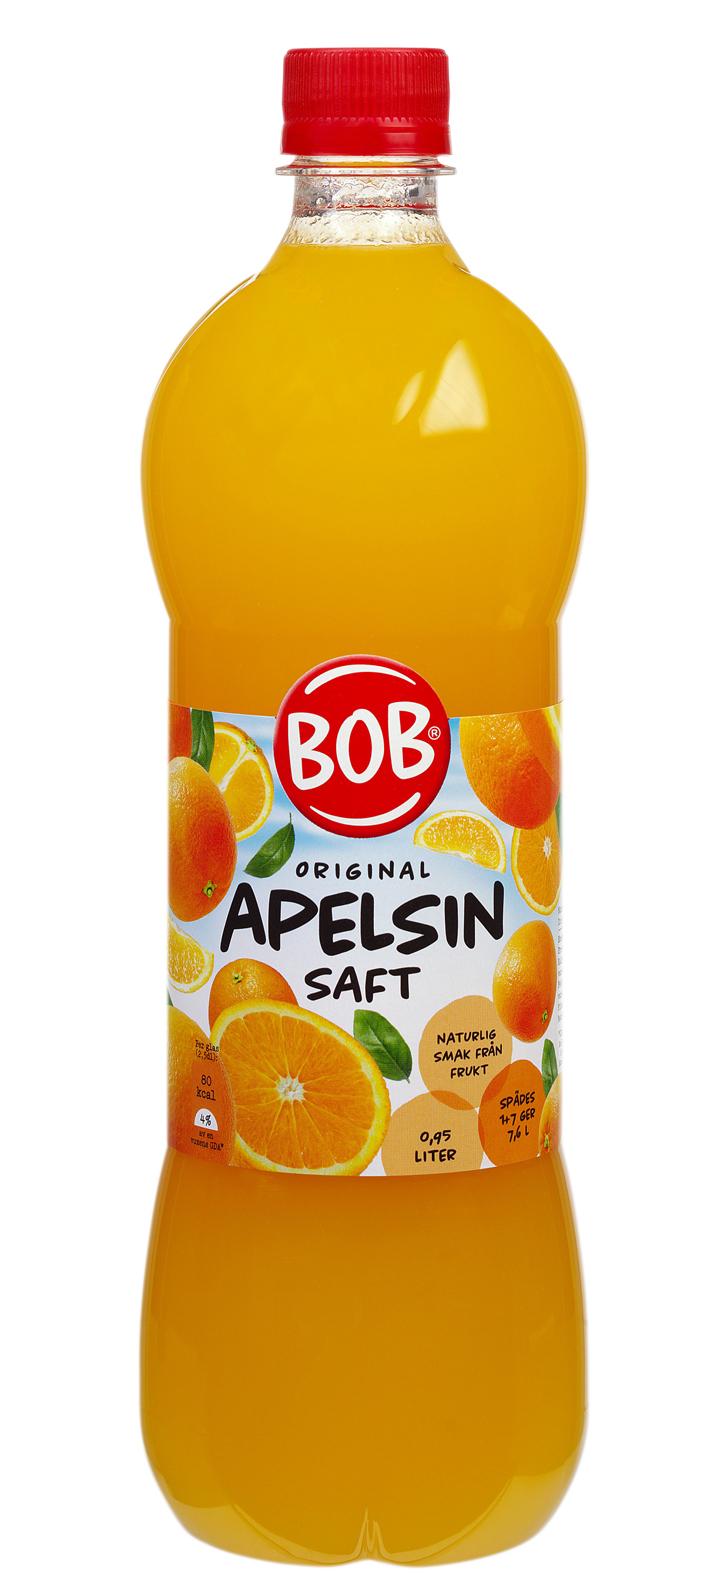 Saft - Apelsin - Orange Juice Blend